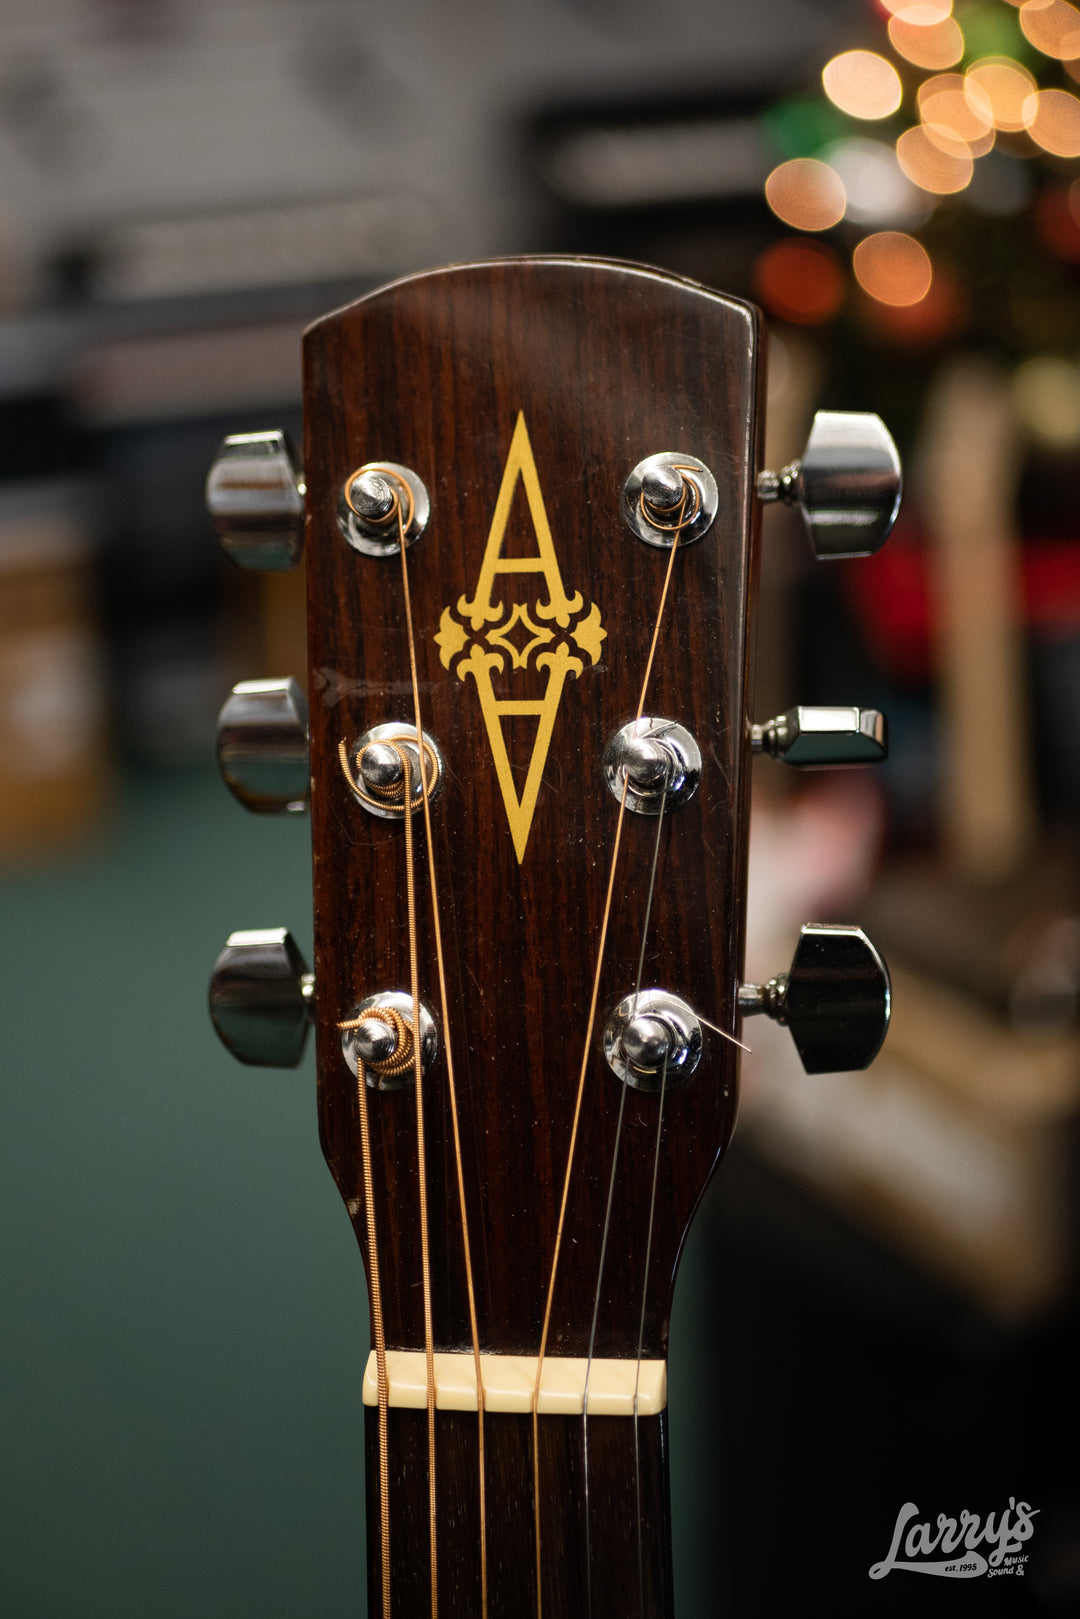 Alvarez RD8 Acoustic Guitar - Used